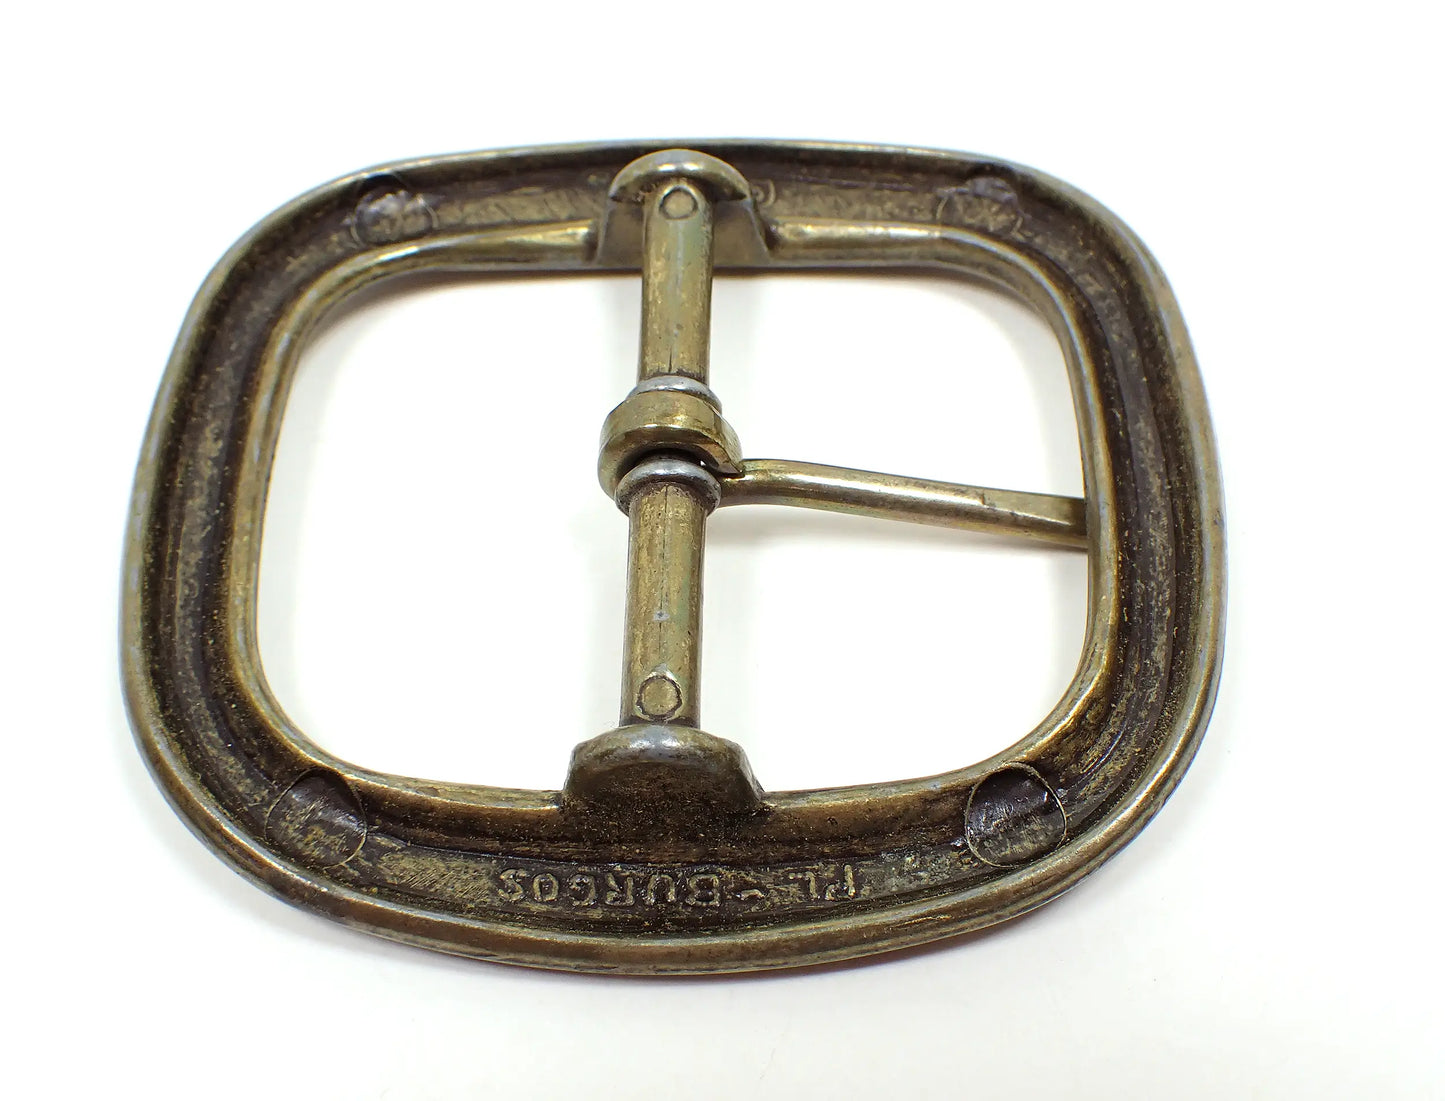 Burgos Retro Vintage Belt Buckle, Open Style with Leaf Design, Antiqued Brass